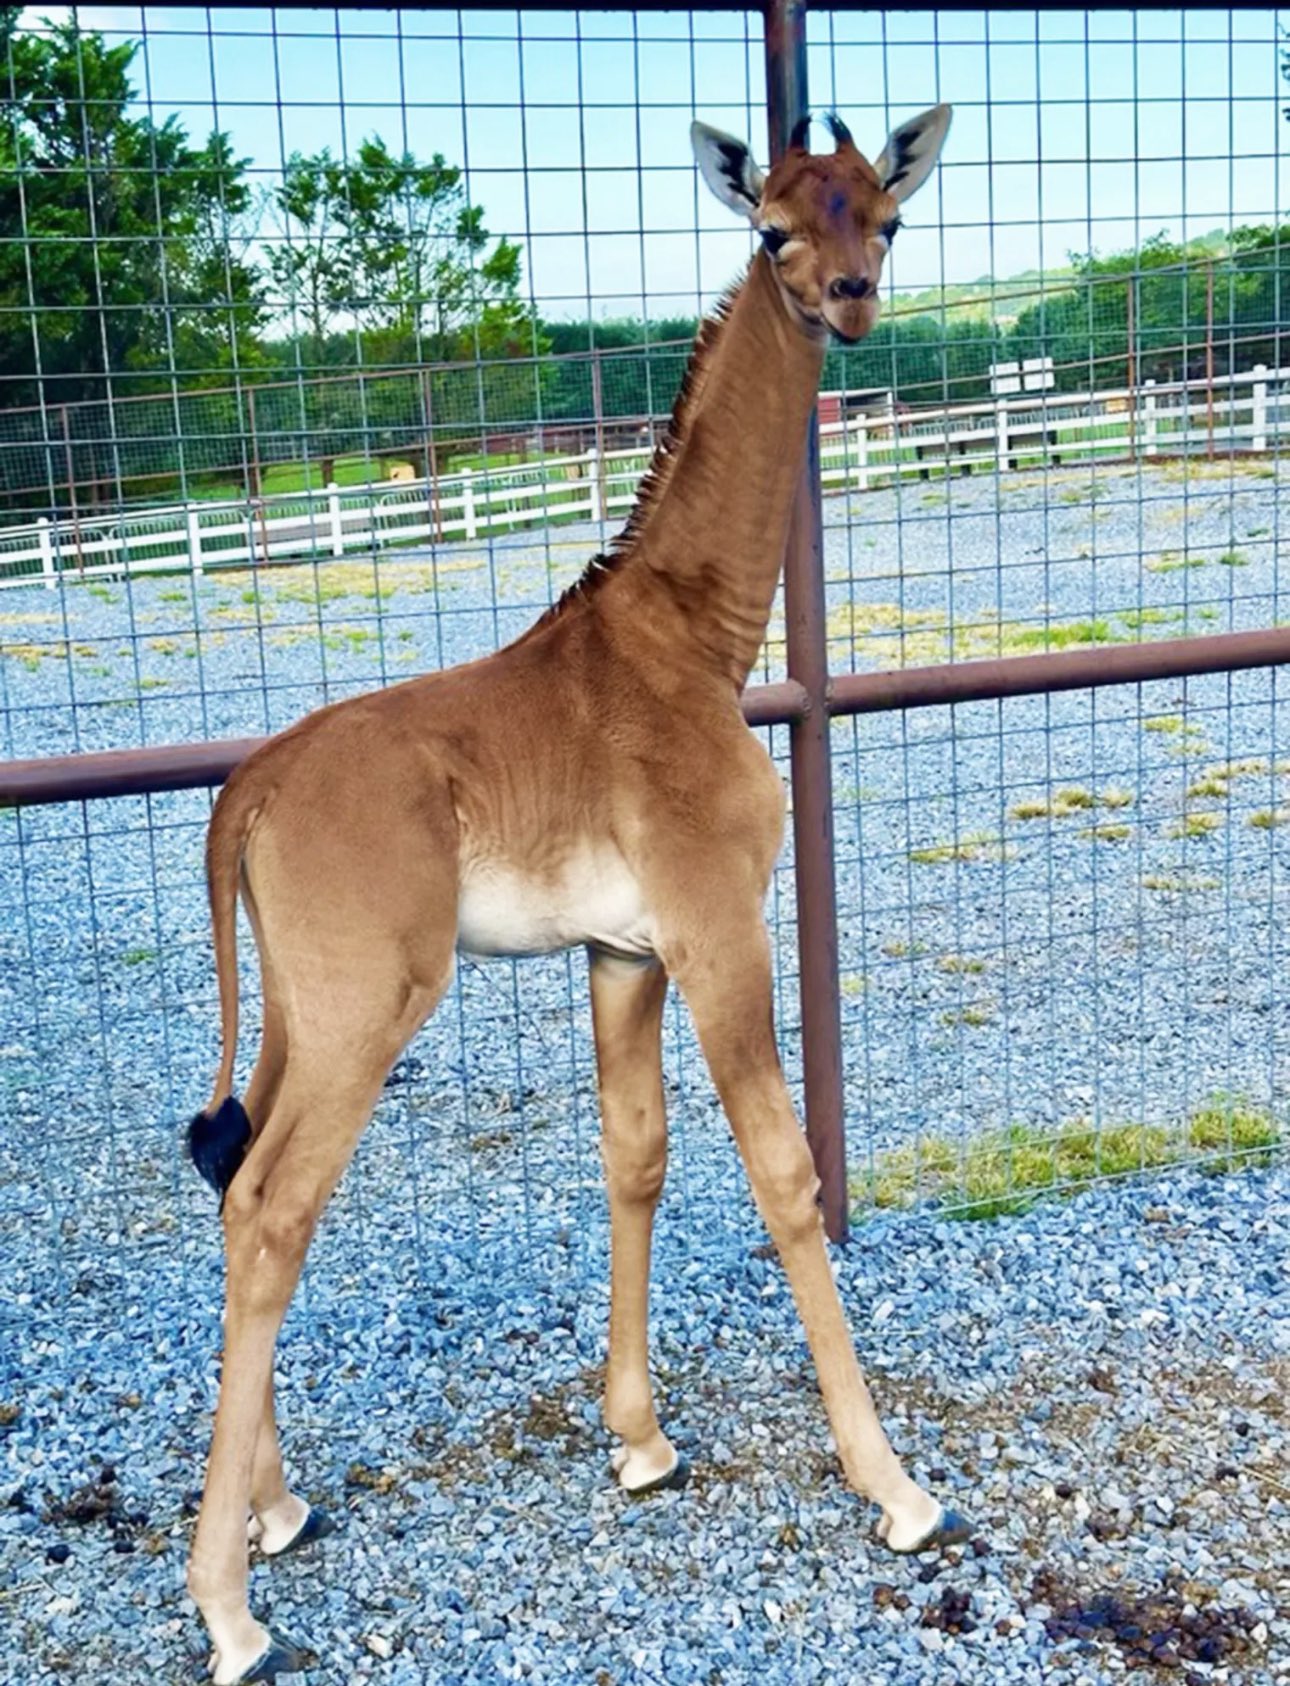 Rare Spotless Giraffe Born at Tennessee Zoo